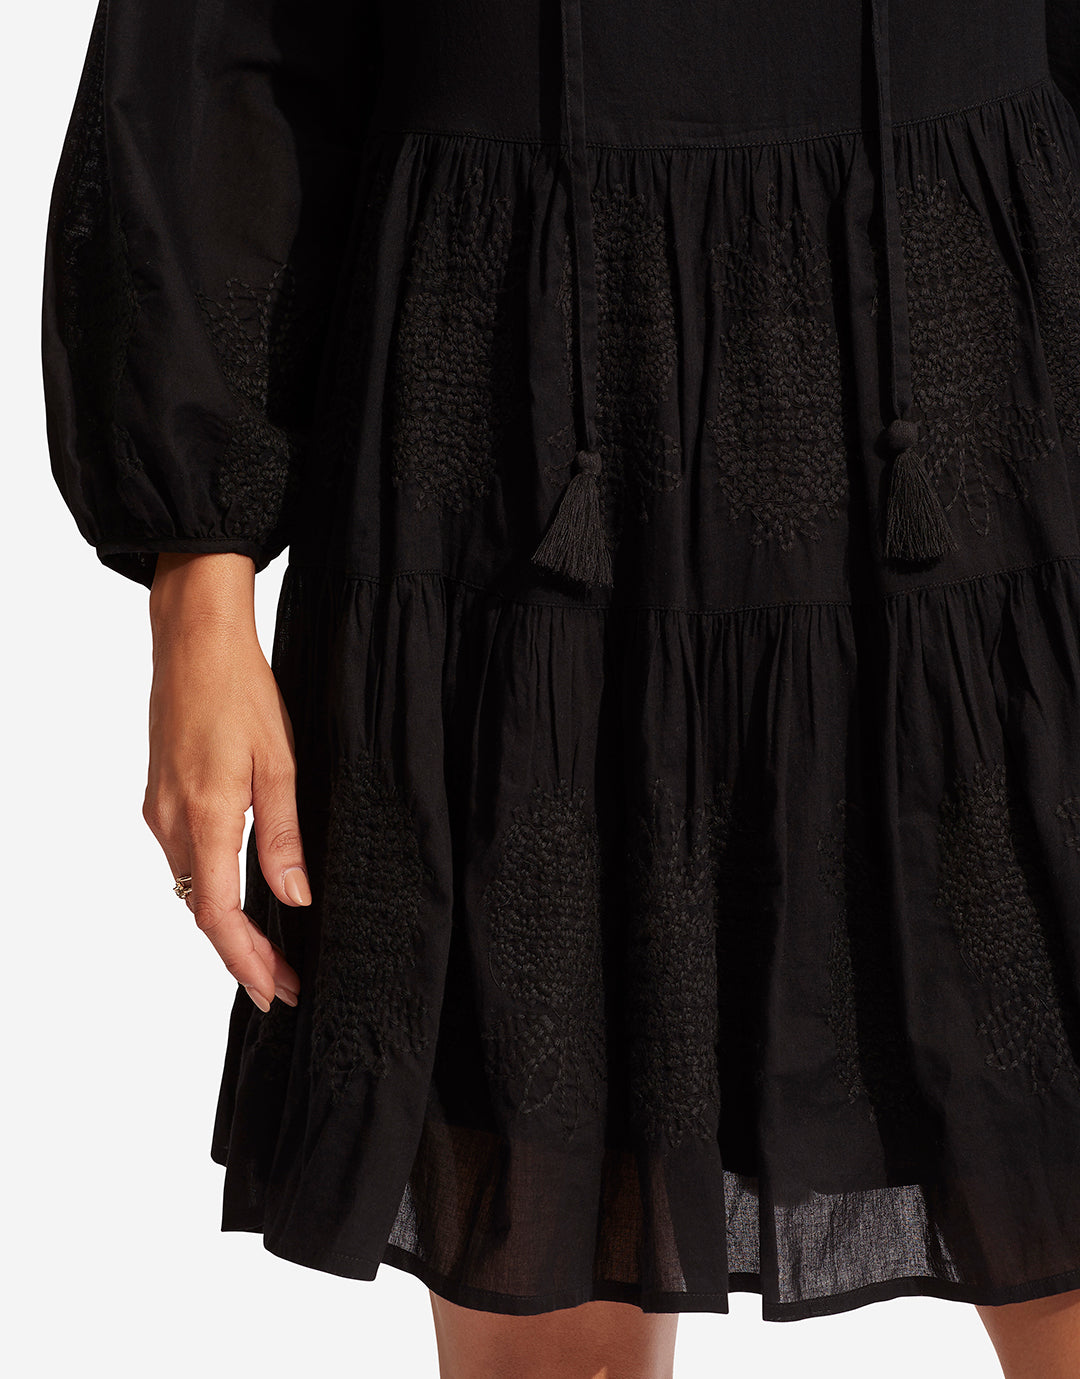 Corsica Embroidery Tier Dress - Black - Simply Beach UK